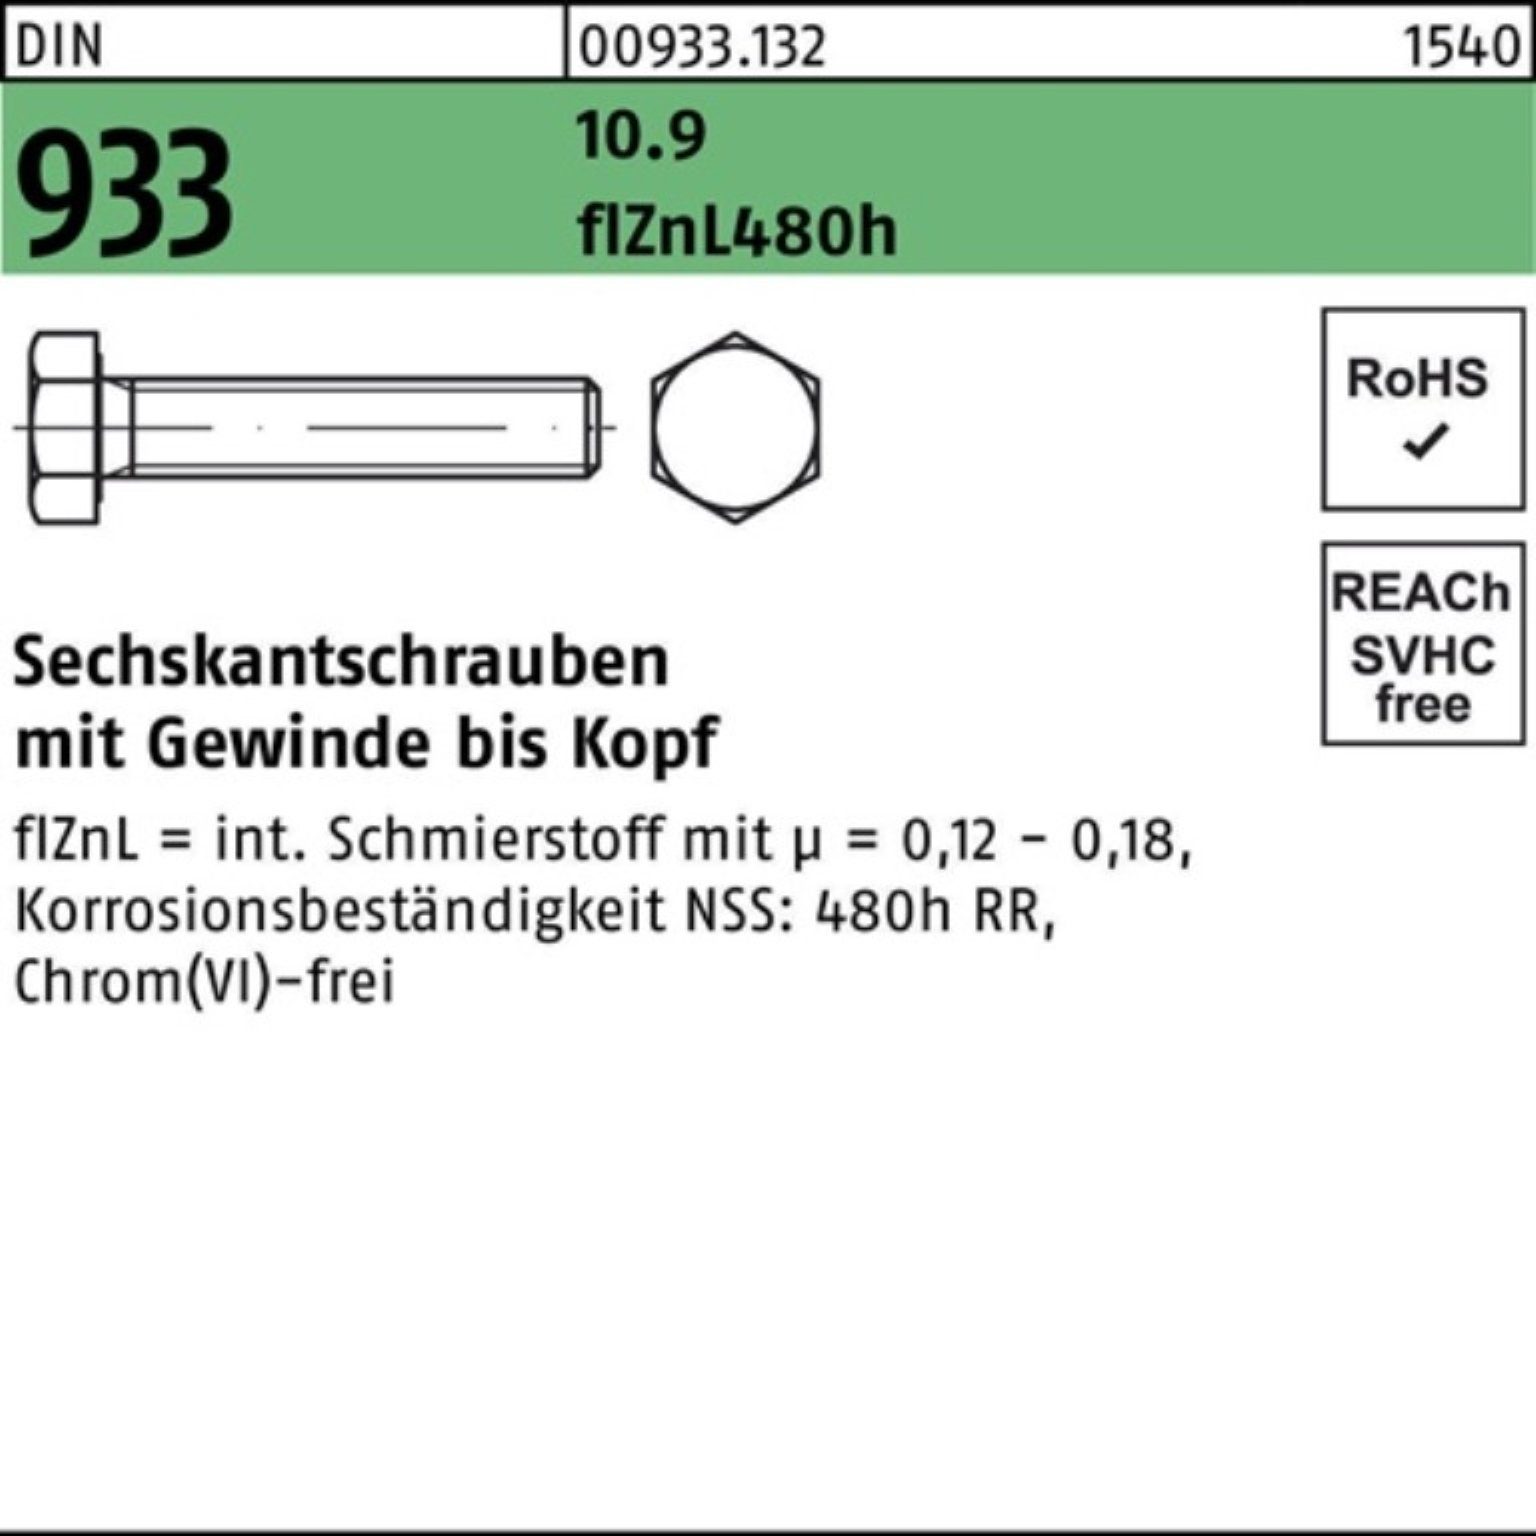 Reyher Sechskantschraube 100er Pack Sechskantschraube DIN 933 VG M24x 45 10.9 flZnL/nc/x/x/480h